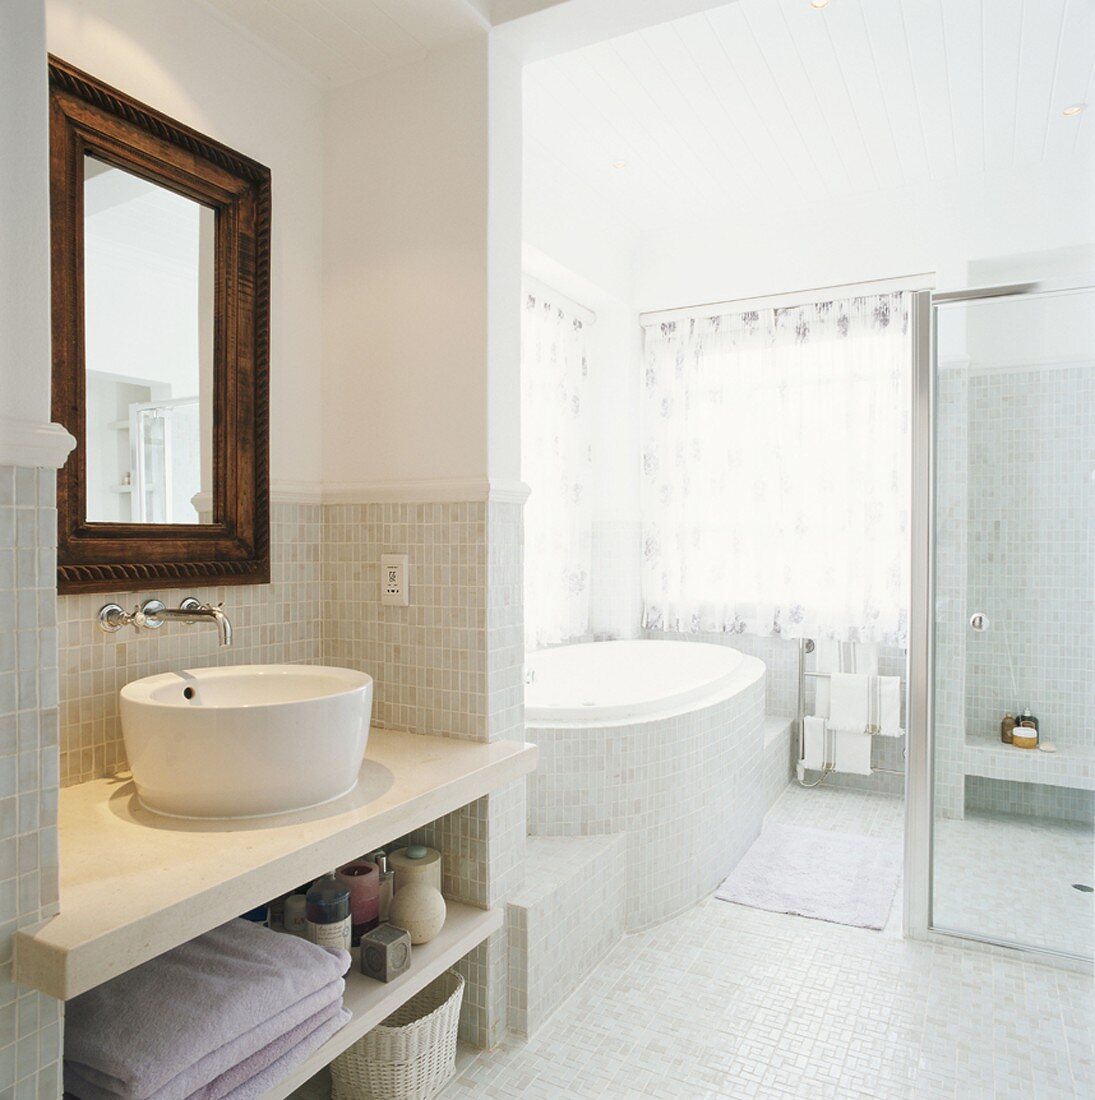 View into bathroom with wash basin & bath